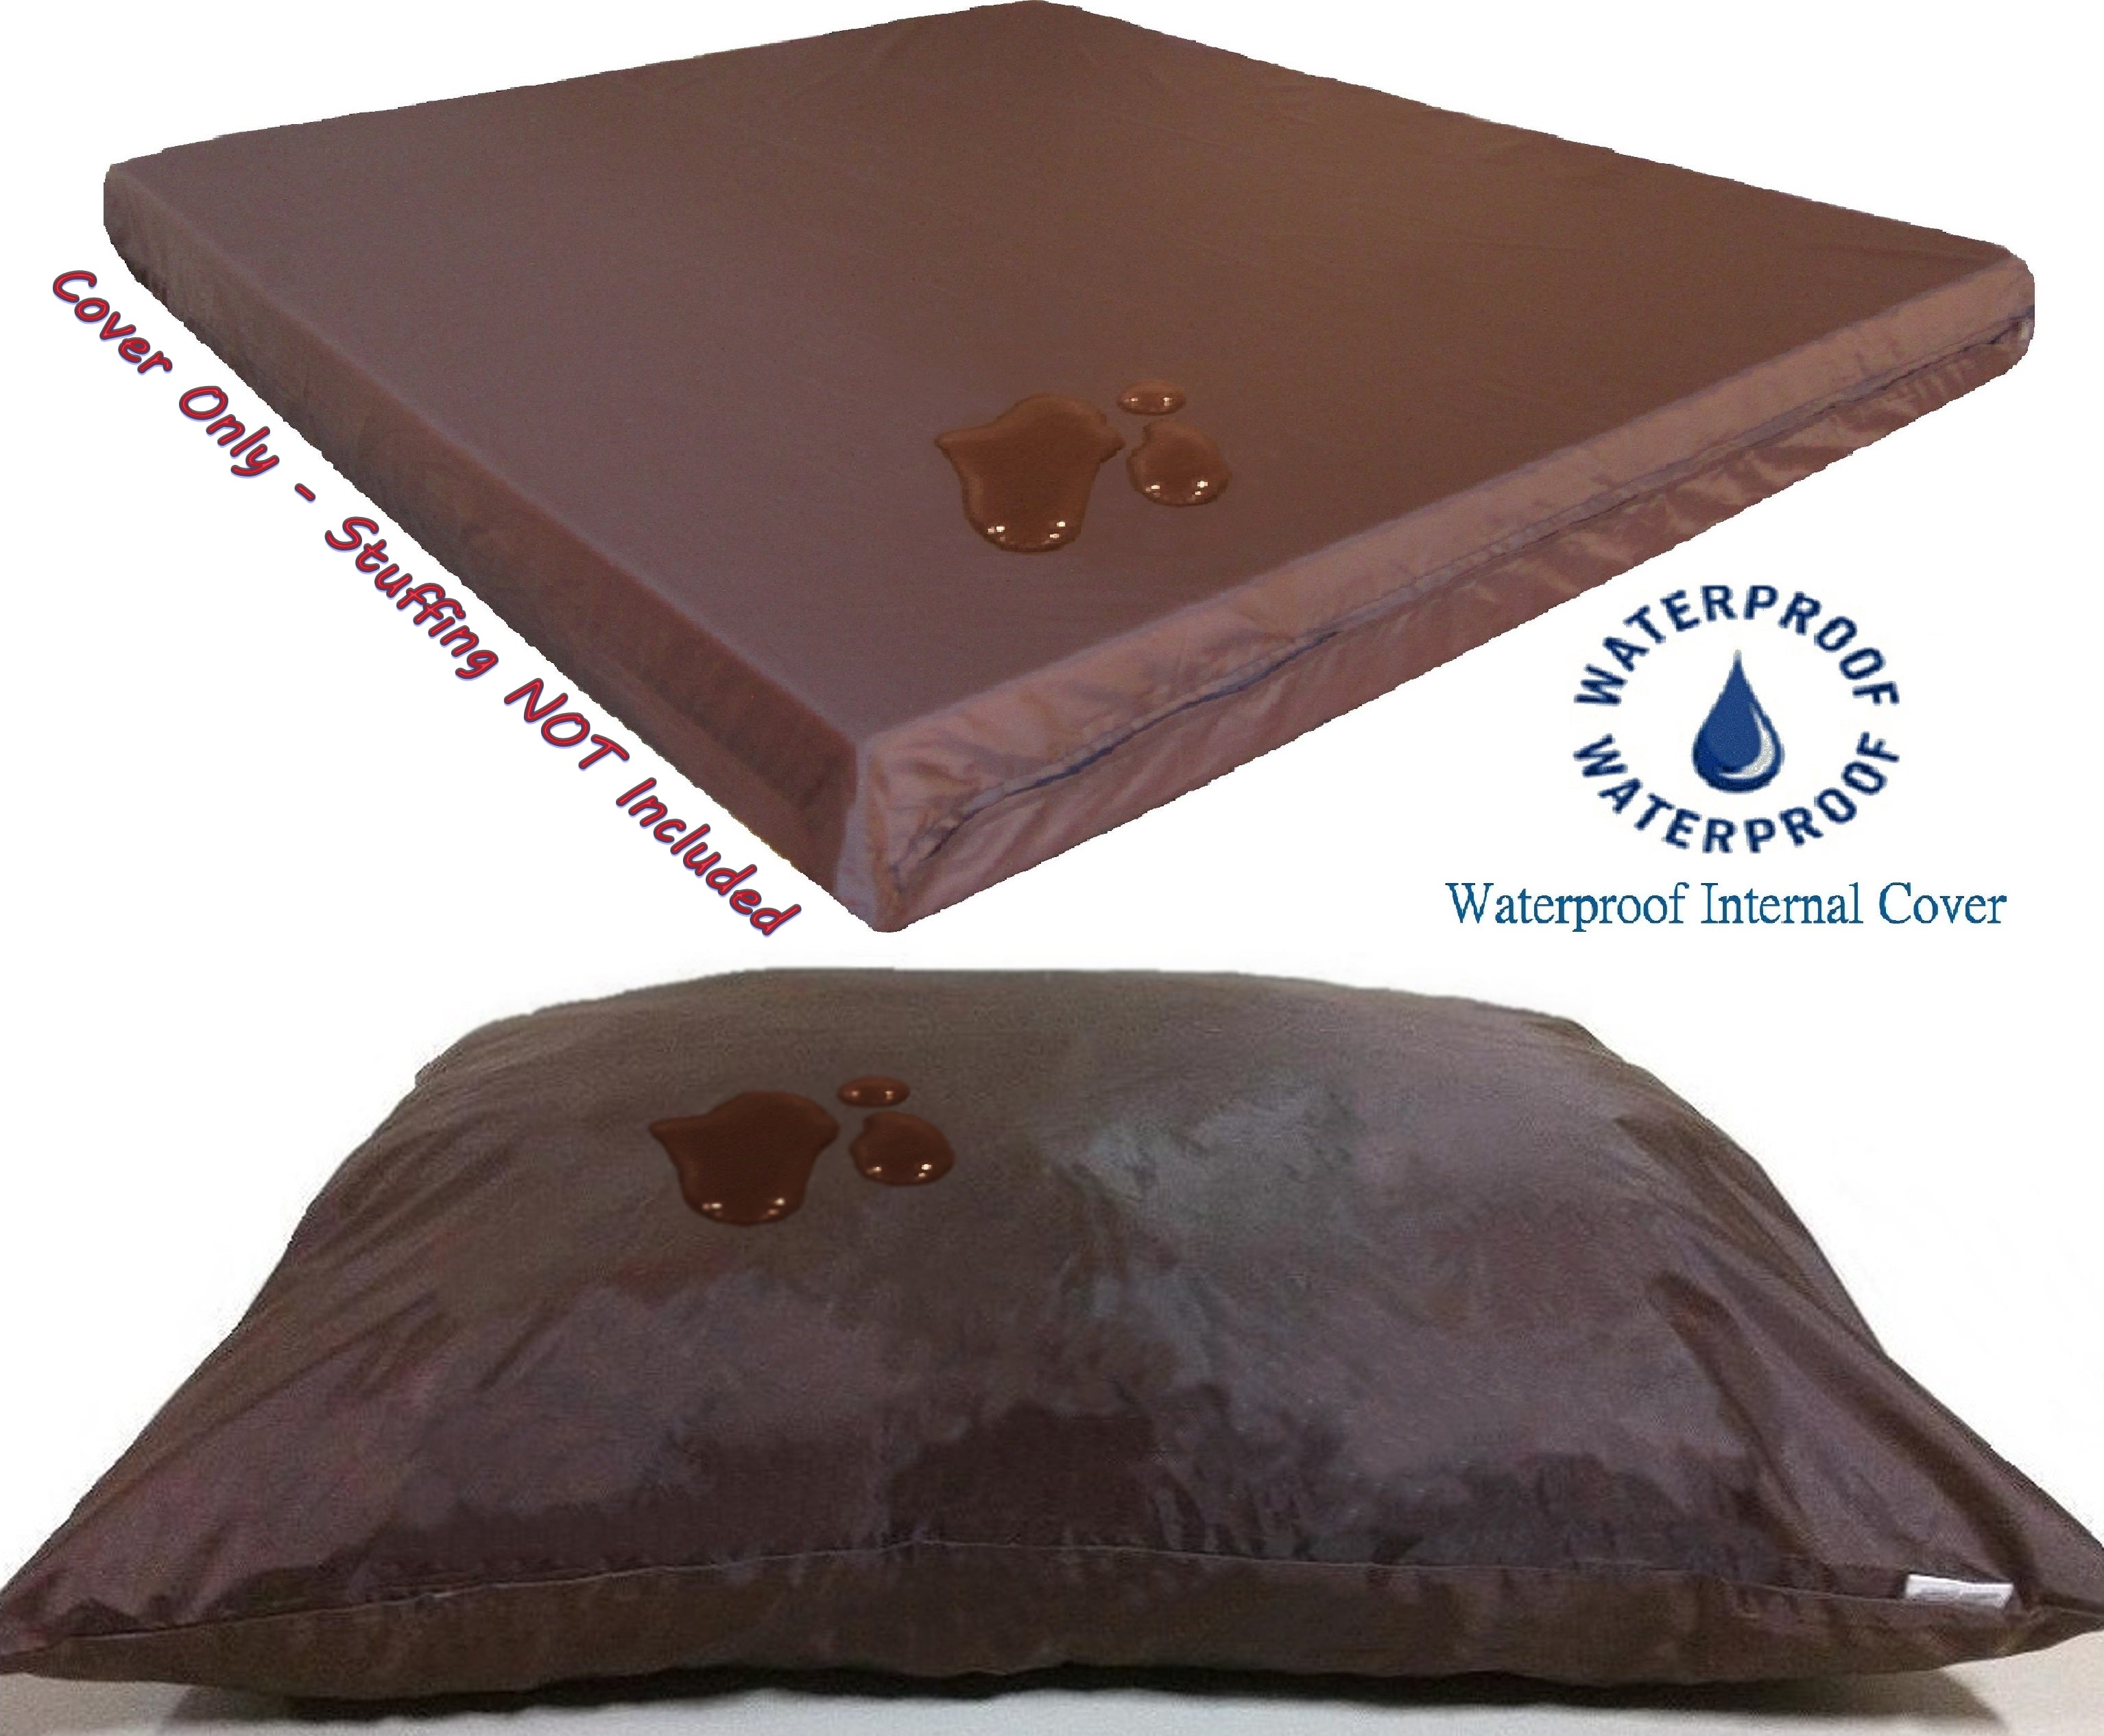 Waterproof internal cover dog bed